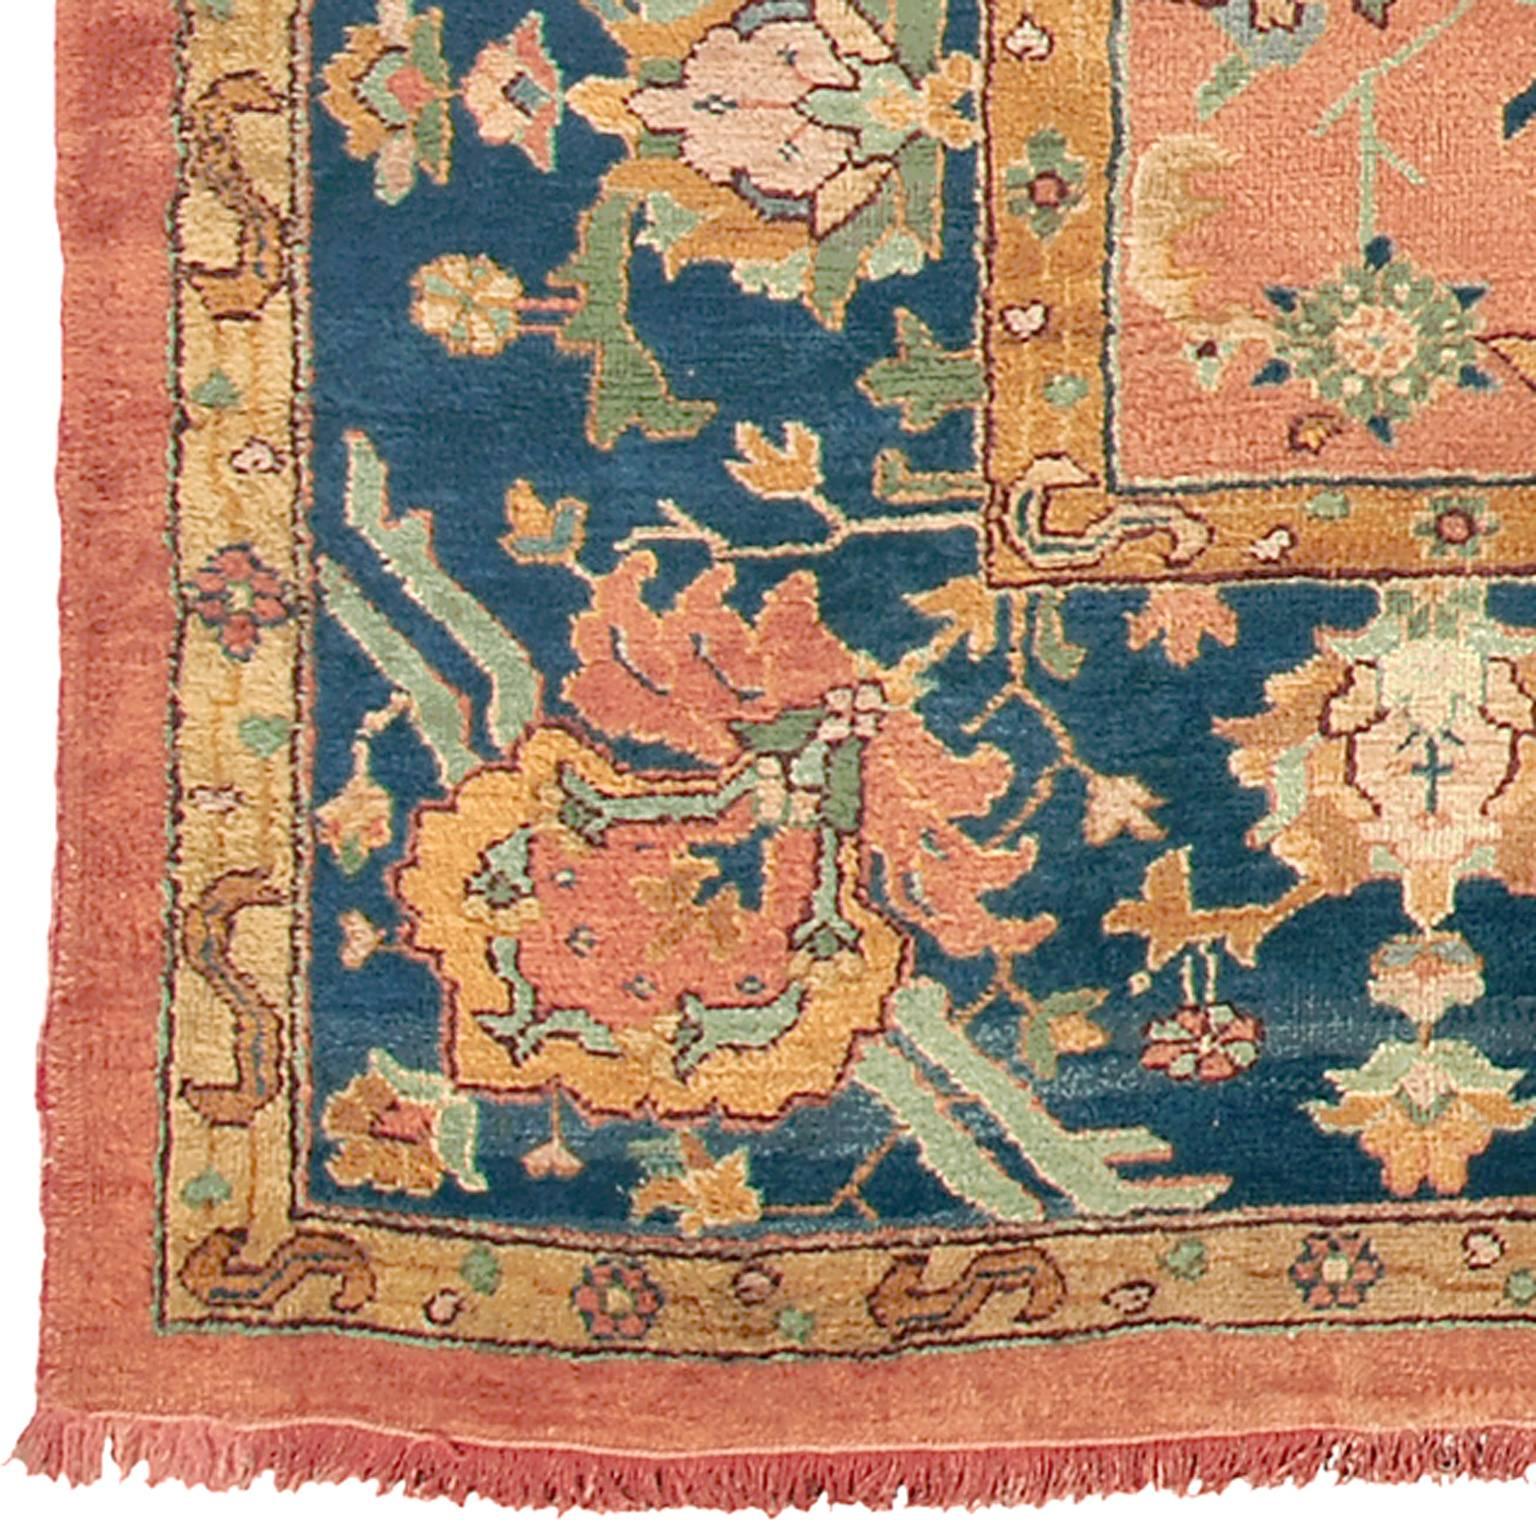 Early 20th century Oushak carpet.